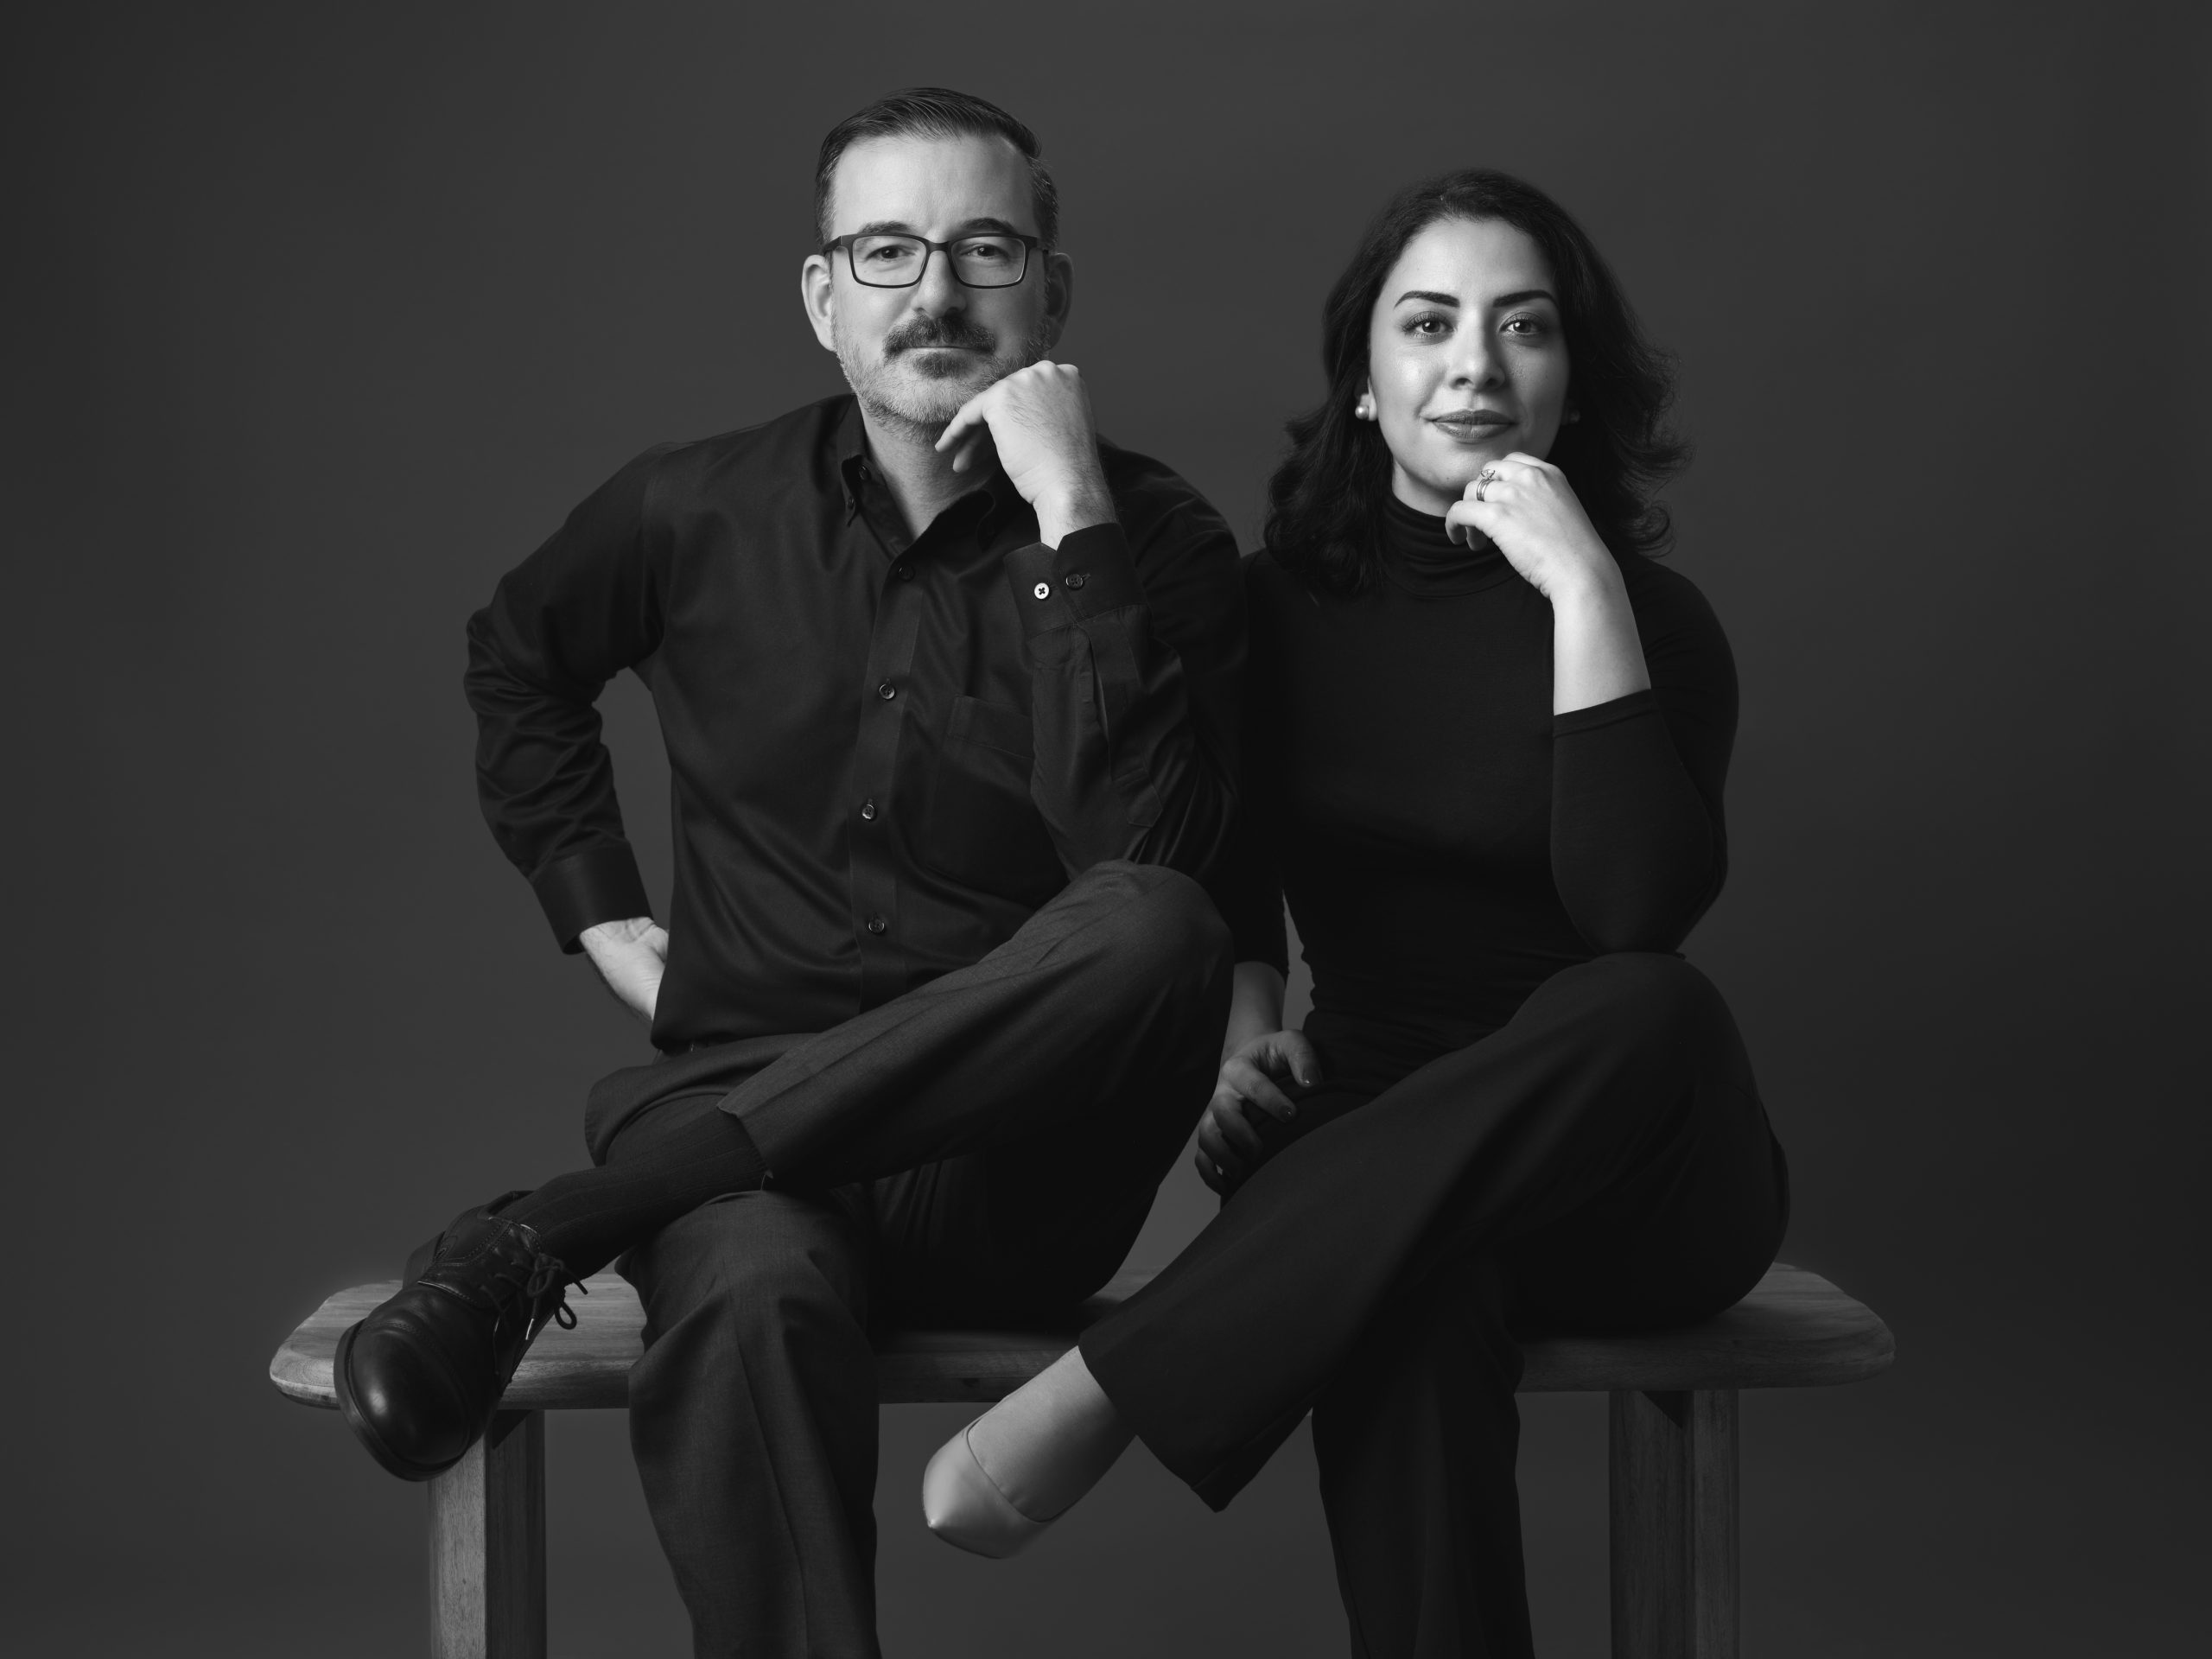 Andrew McCaul & Nadia Mounsif sitting on a bench